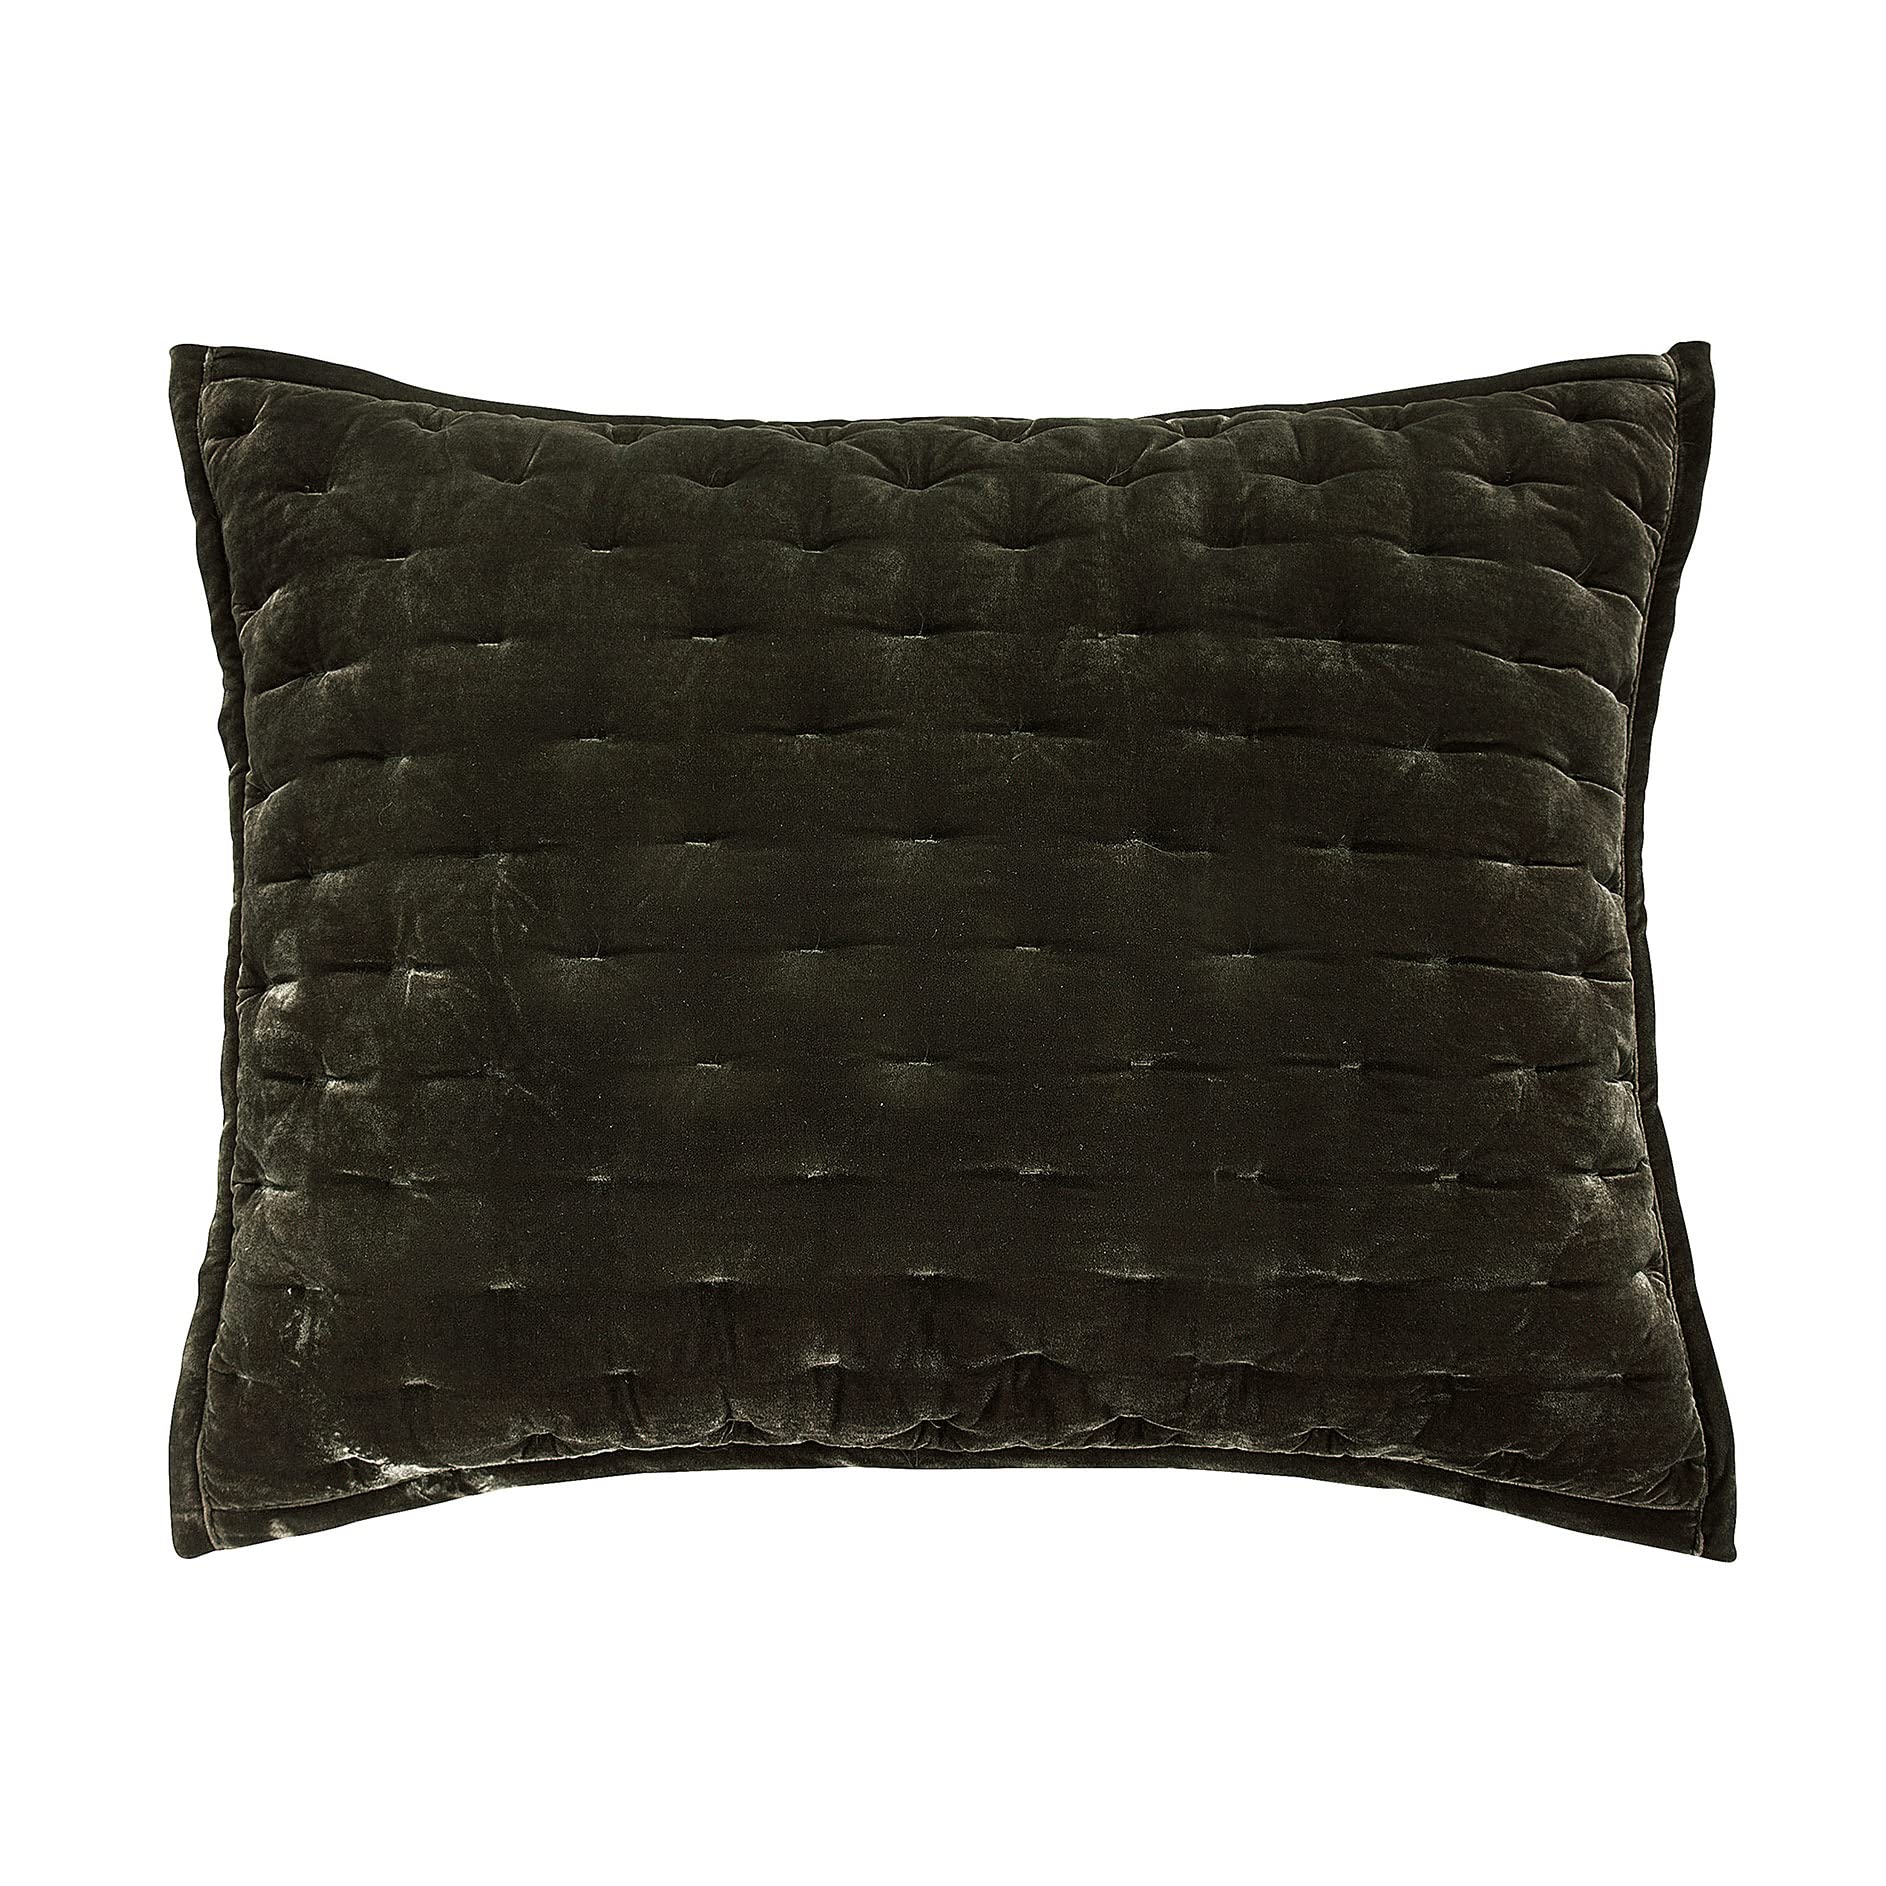 HiEnd Accents Stella Faux Silk Velvet Pillow Sham King 21x34 inch Fern Green Romantic Western Modern Traditional Style Lu